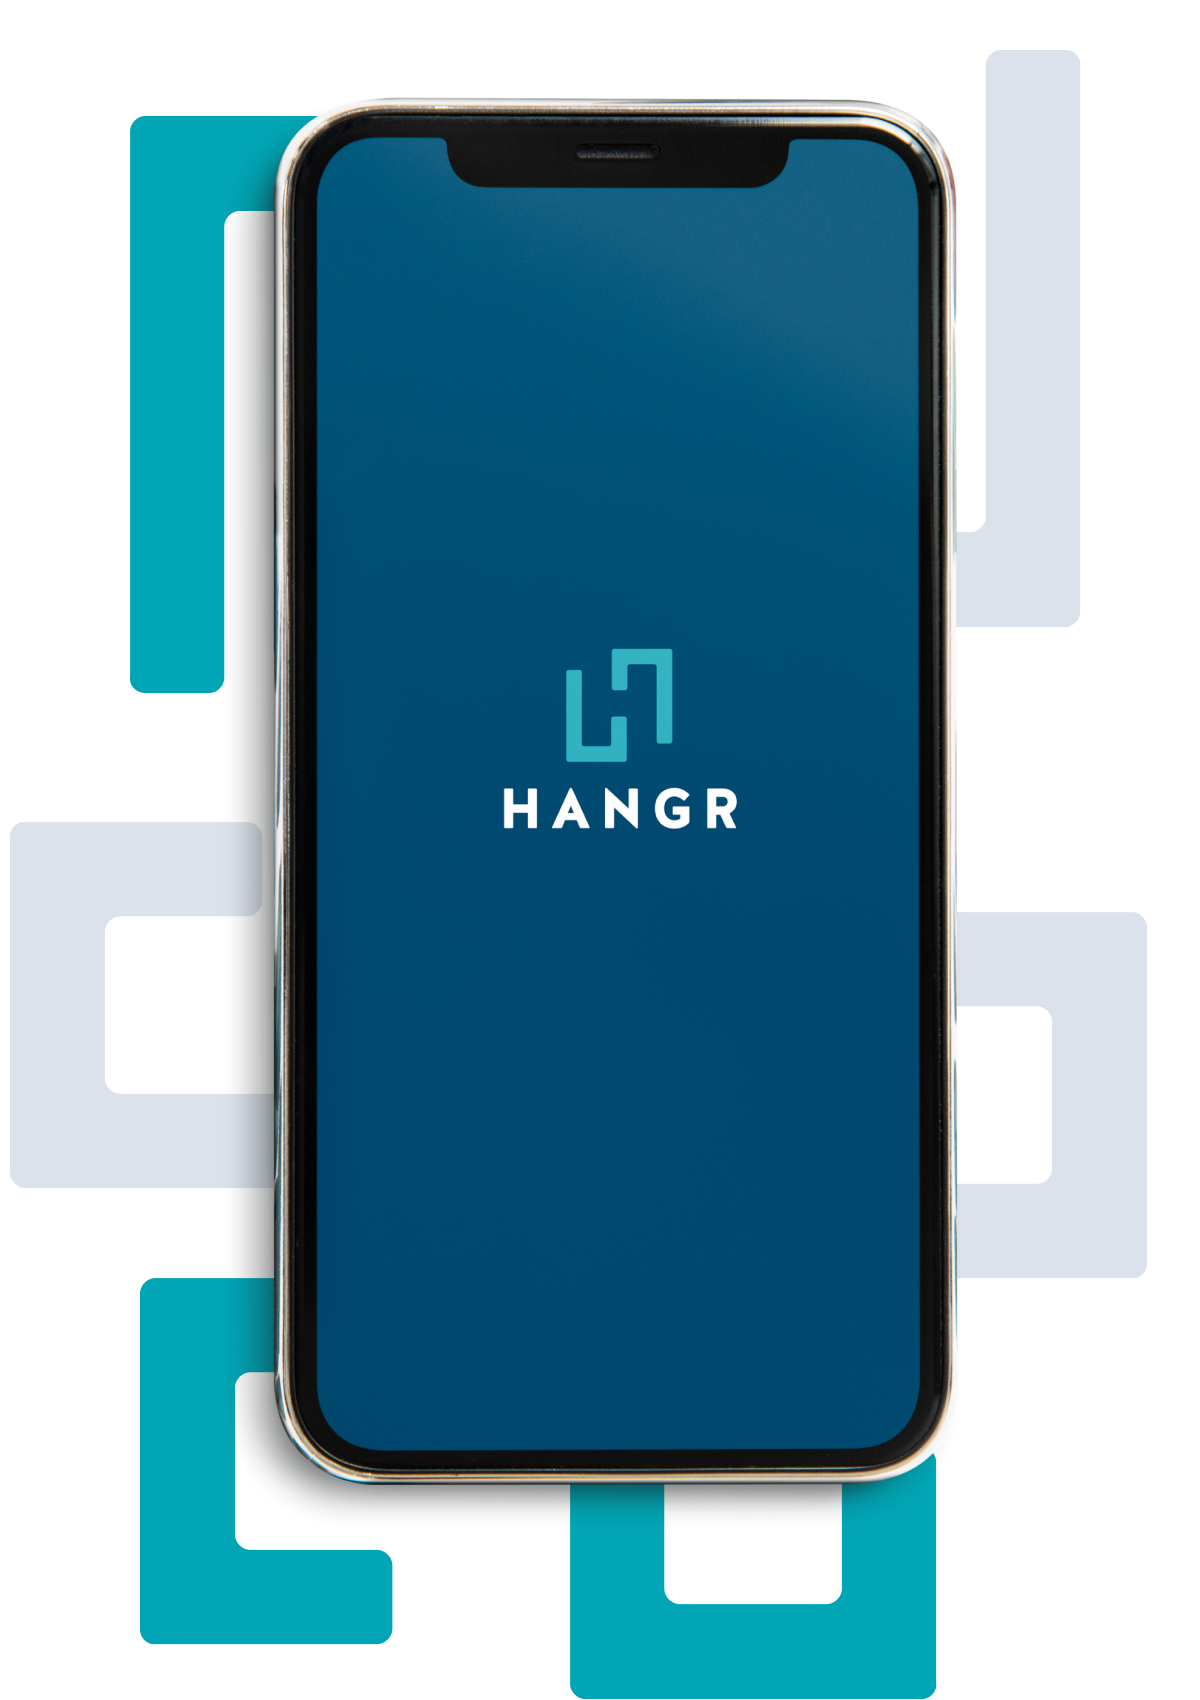 Hangr App